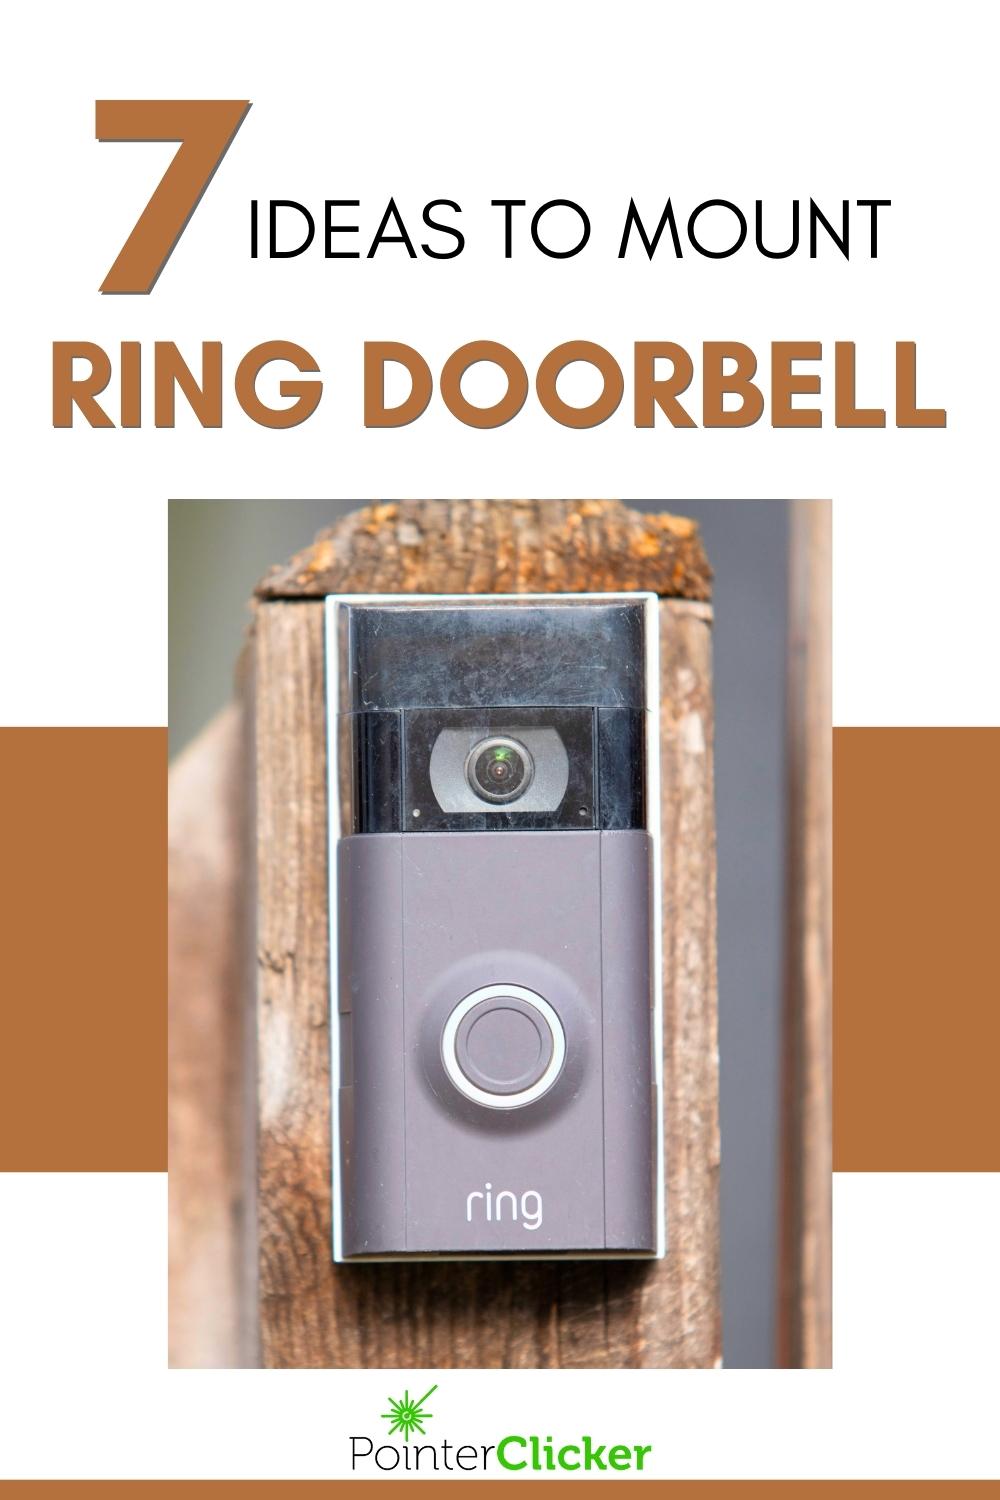 7 ideas to mount ring doorbell